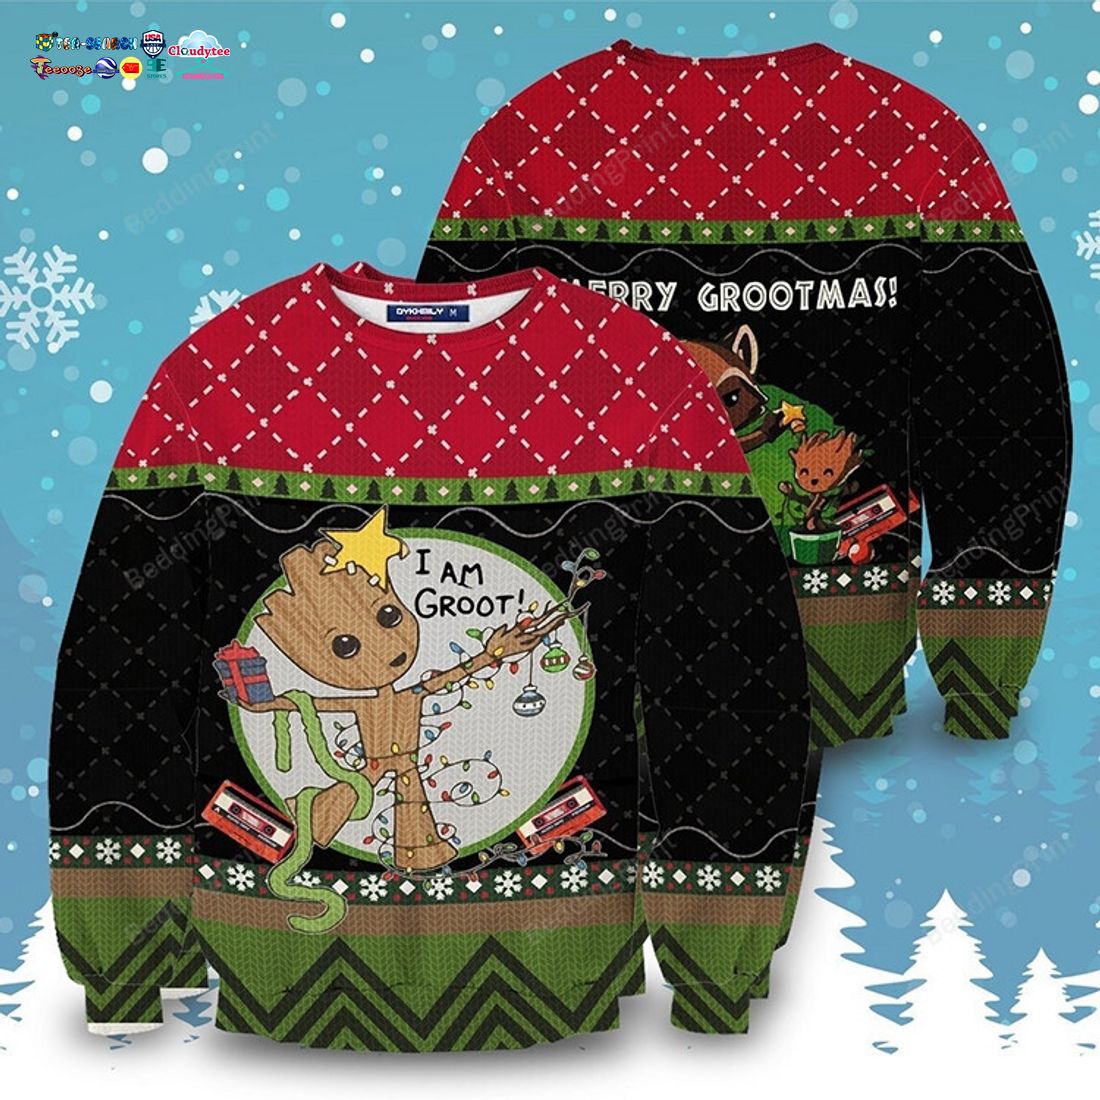 I Am Groot Merry Grootmas Ugly Christmas Sweater - Cool look bro